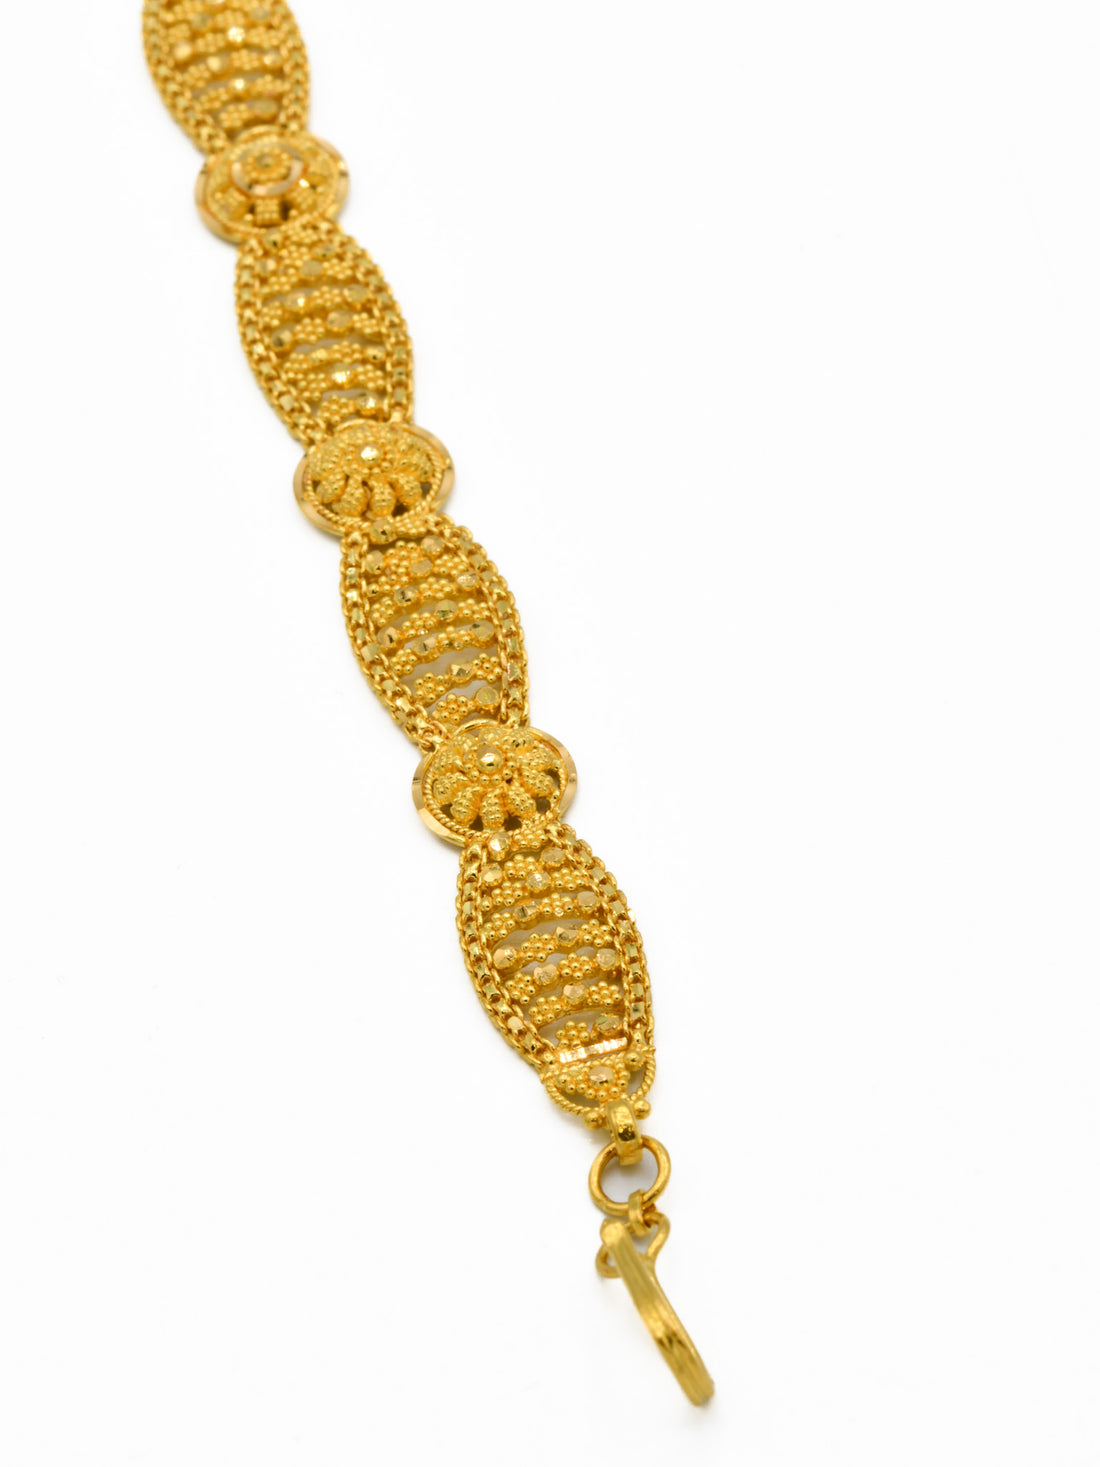 22ct Gold Filigree Ladies Bracelet